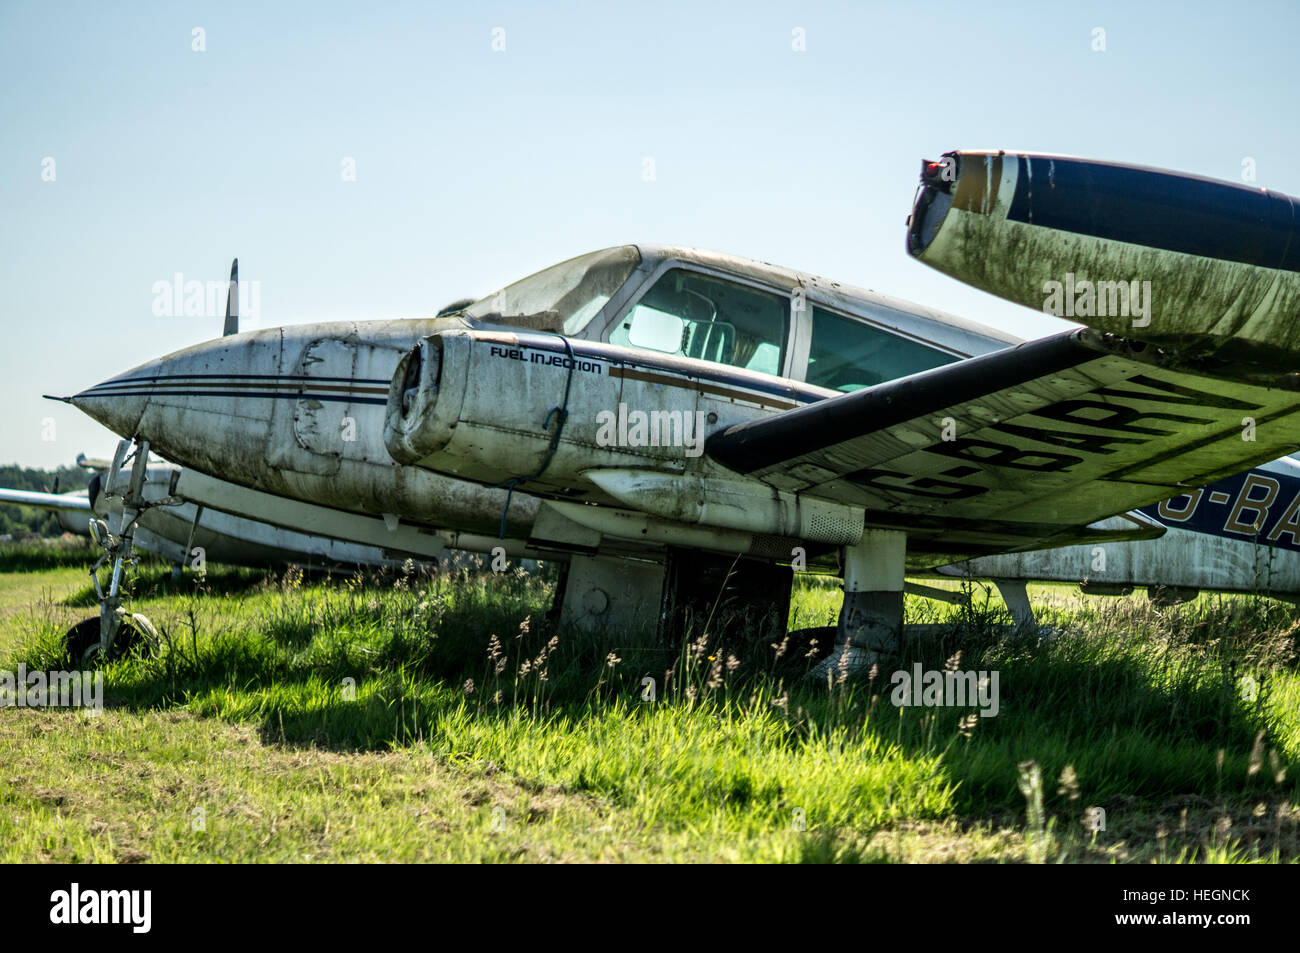 Cessna 310 -Fotos und -Bildmaterial in hoher Auflösung – Alamy